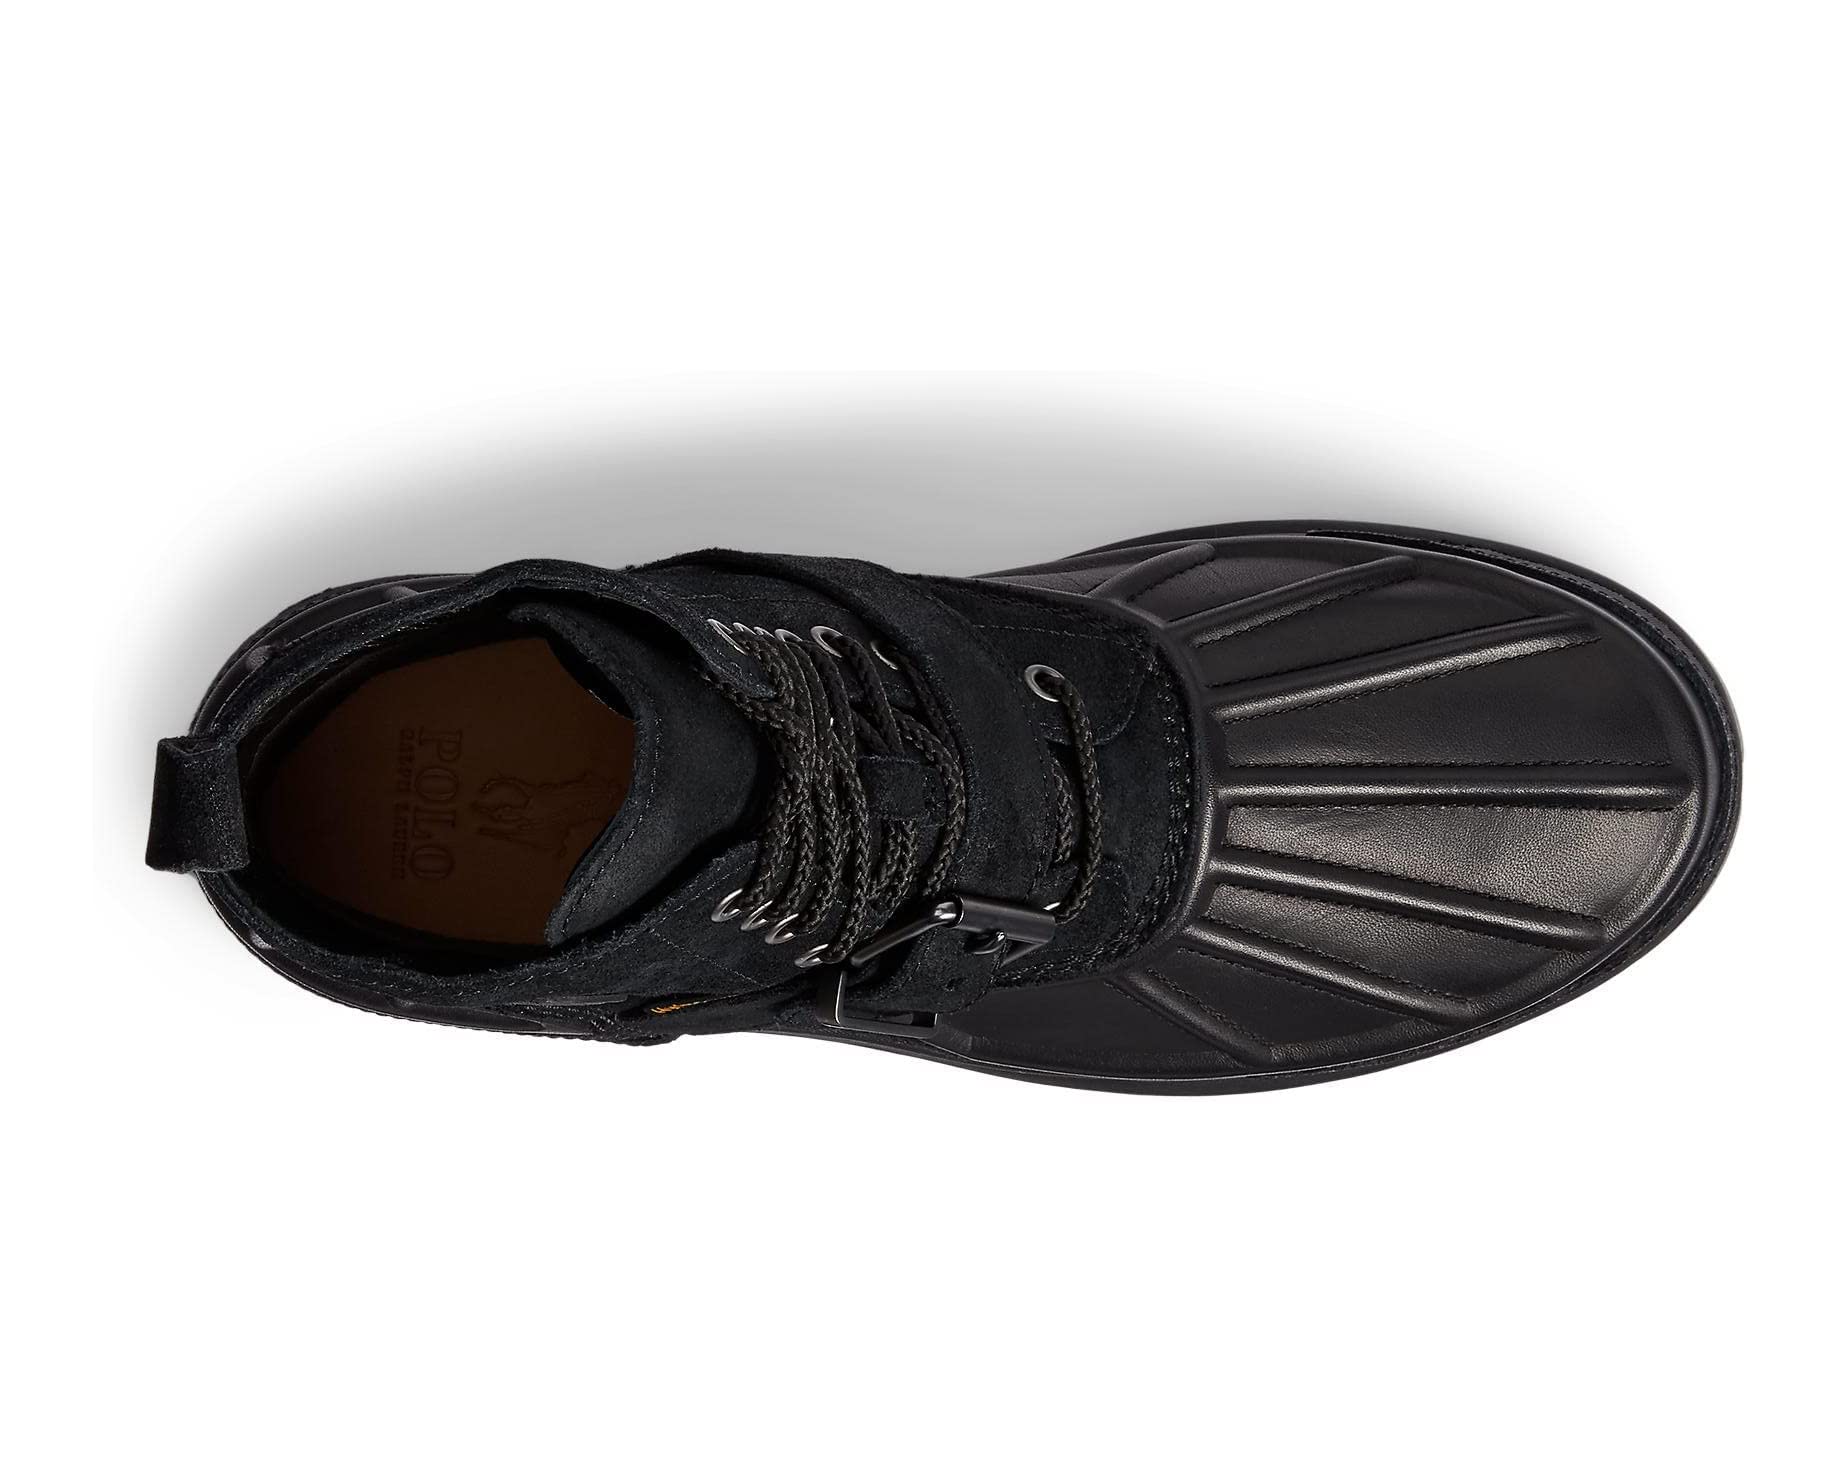 Ботинки Oslo High Boot Polo Ralph Lauren, черный сапоги polo ralph lauren размер 11 черный